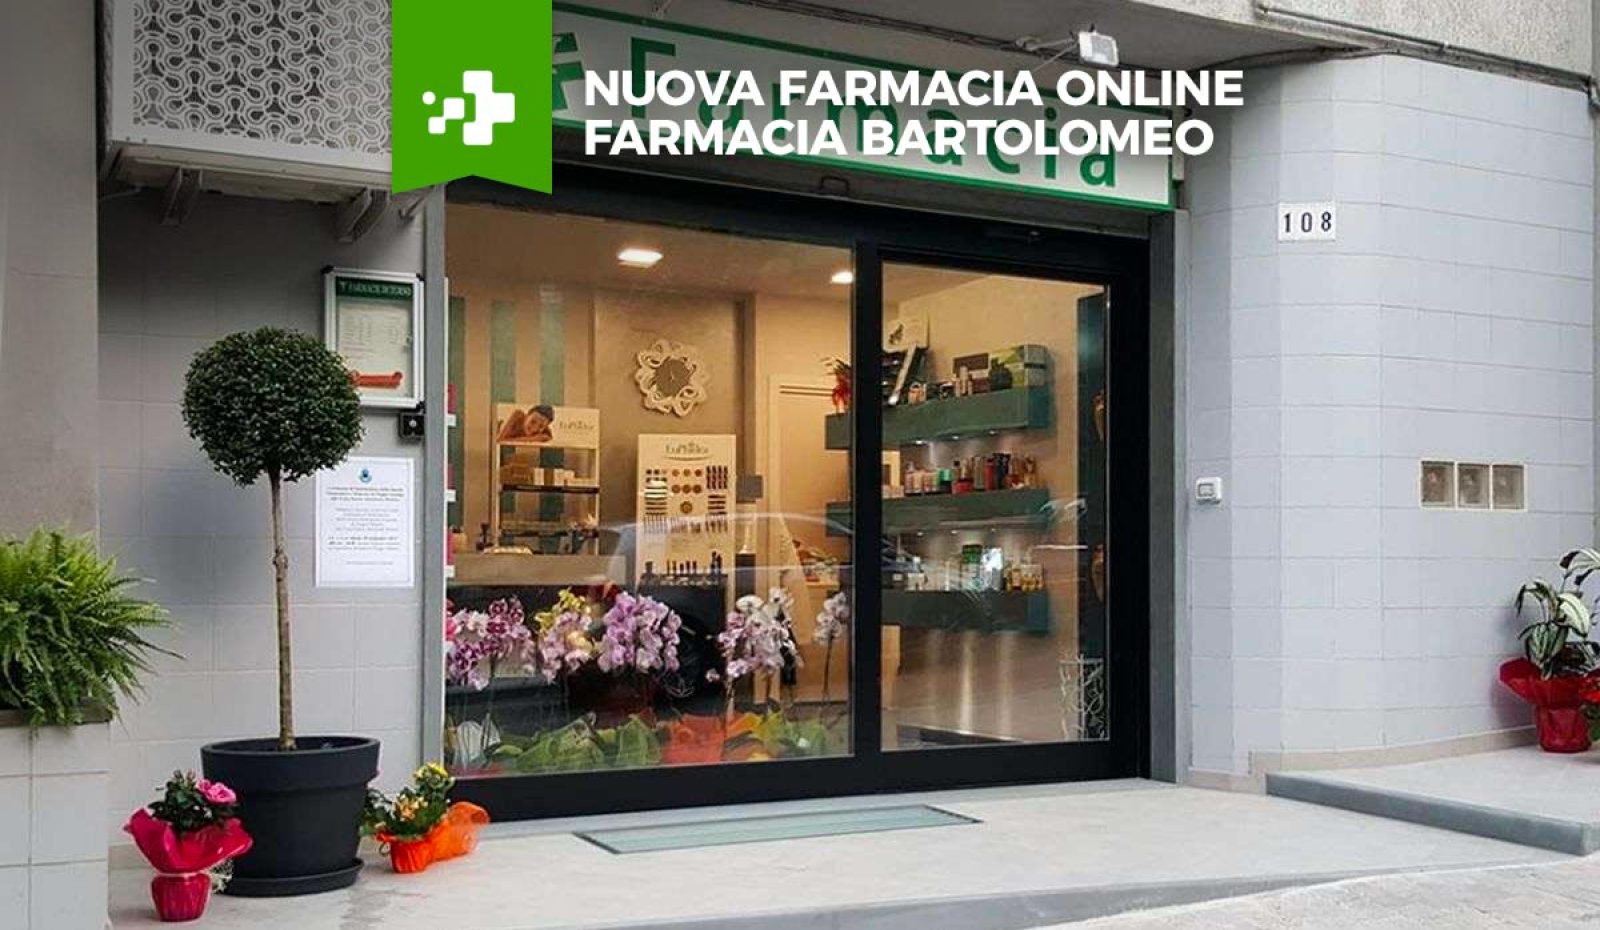 Farmacia Bartolomeo - Poggio Sannita - Isernia